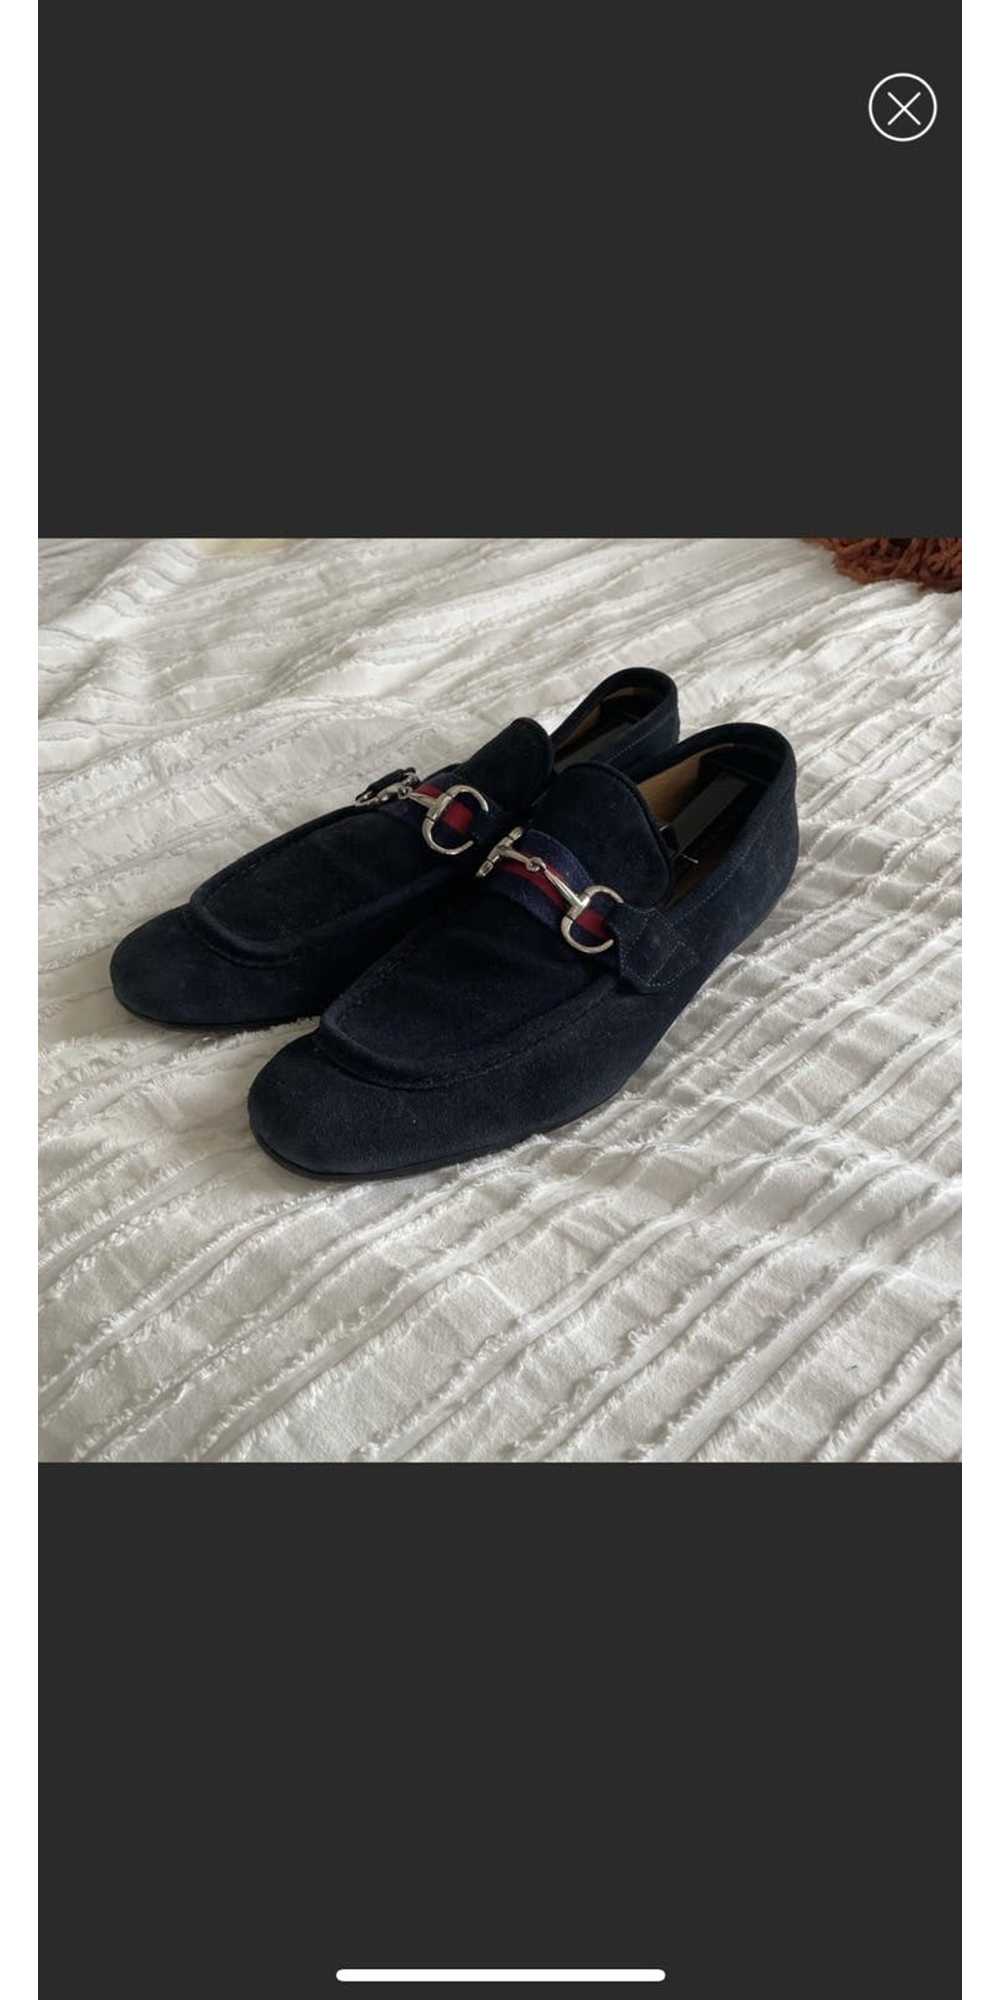 Gucci Gucci loafers - image 2